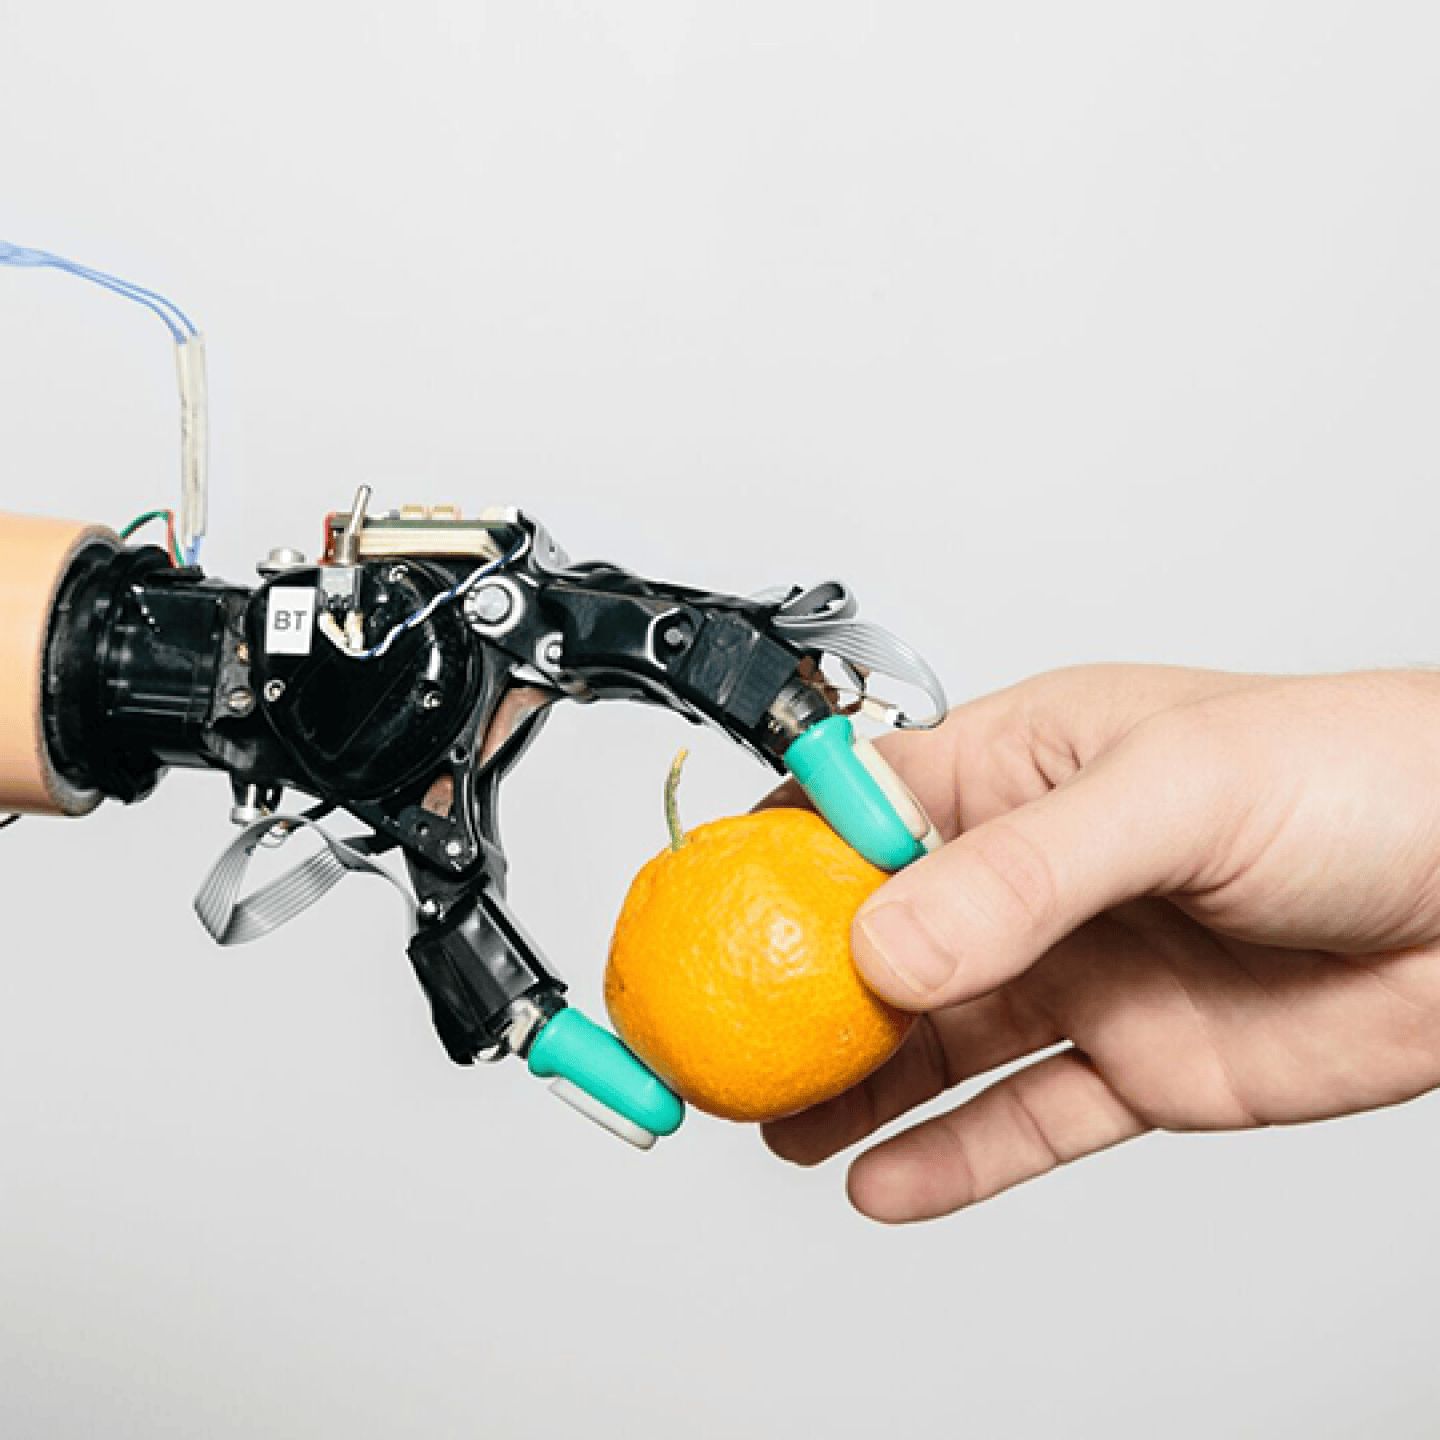 Una mano robotica che prende un'arancia da una mano umana